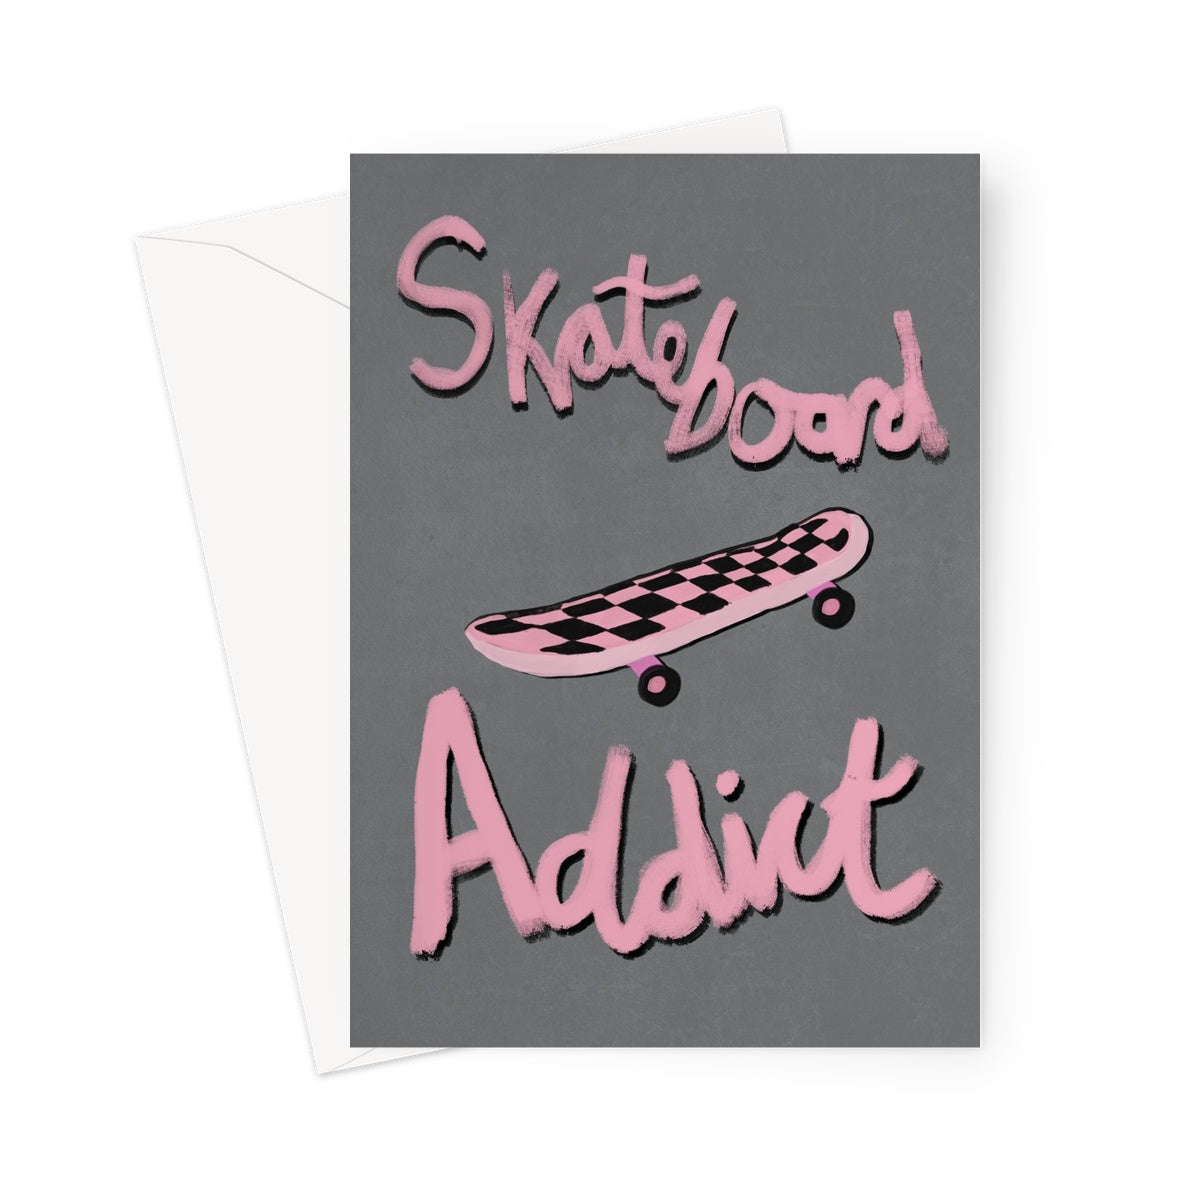 Skateboard Addict - Grey, Pink Greeting Card